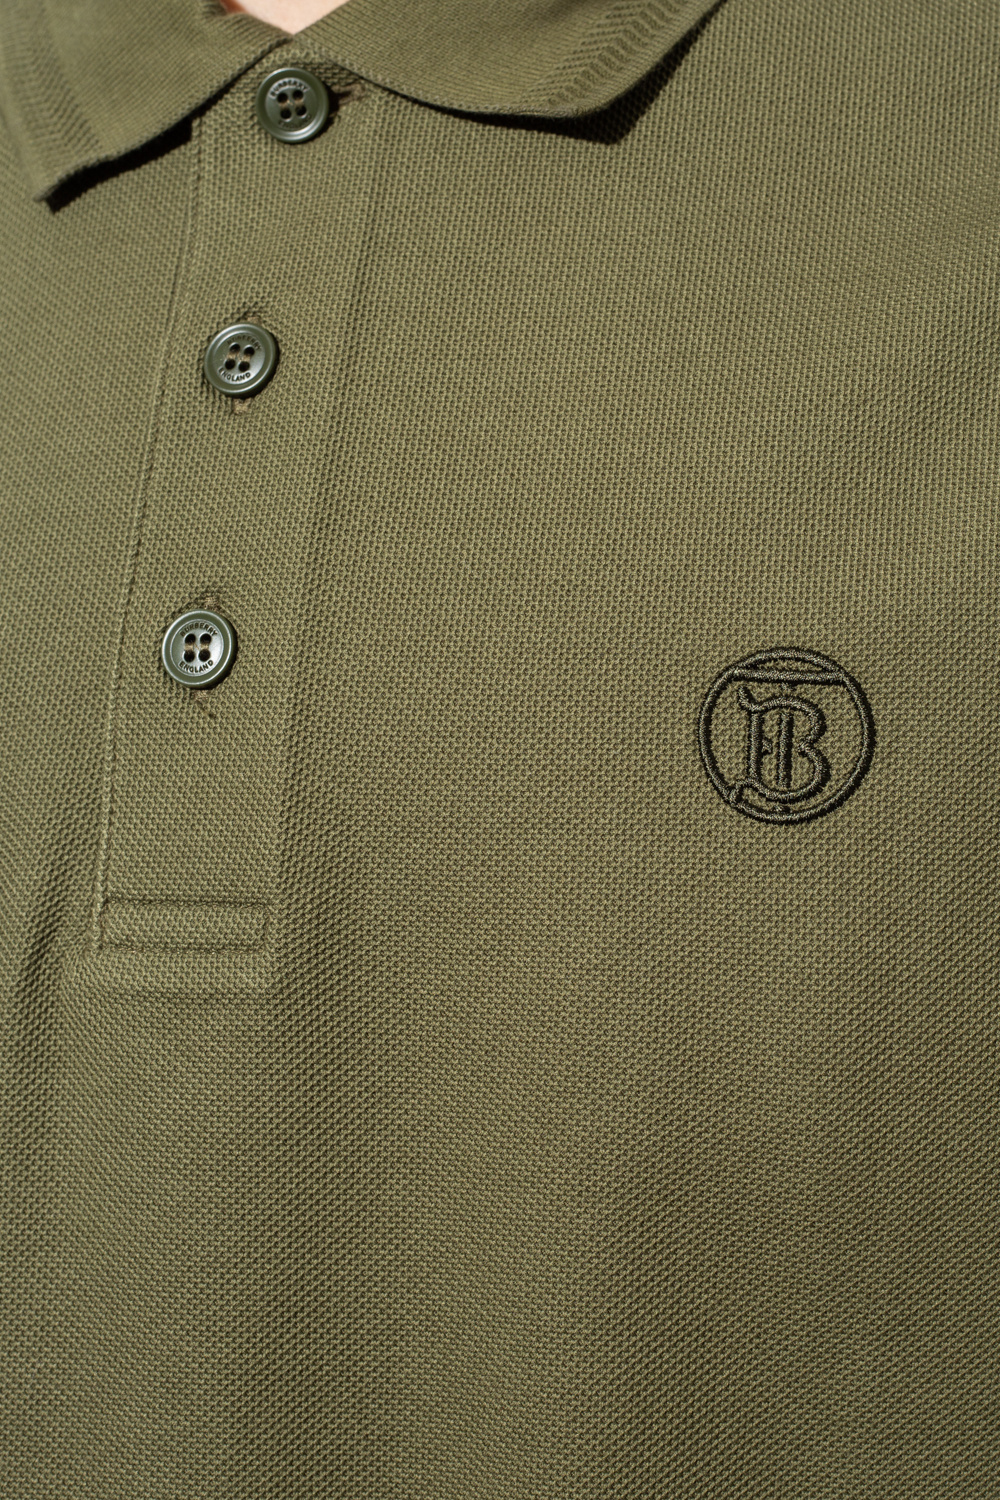 Burberry ‘Eddie’ polo Barbour shirt with logo